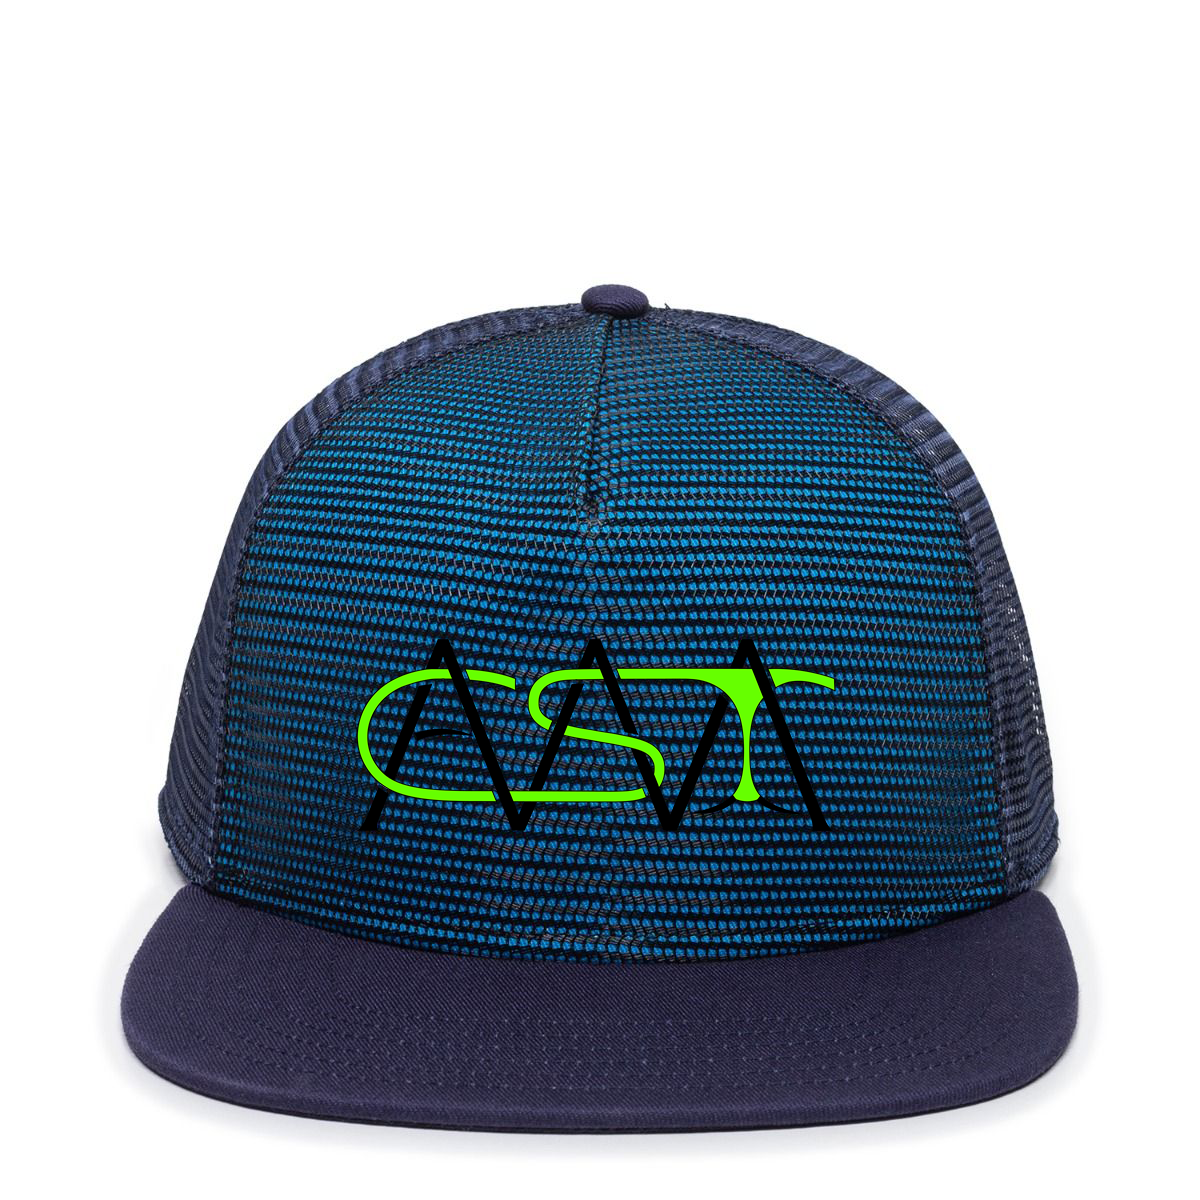 custom design of Outdoor Cap REDLBL108 - Mesh Overlay Snap Back Cap